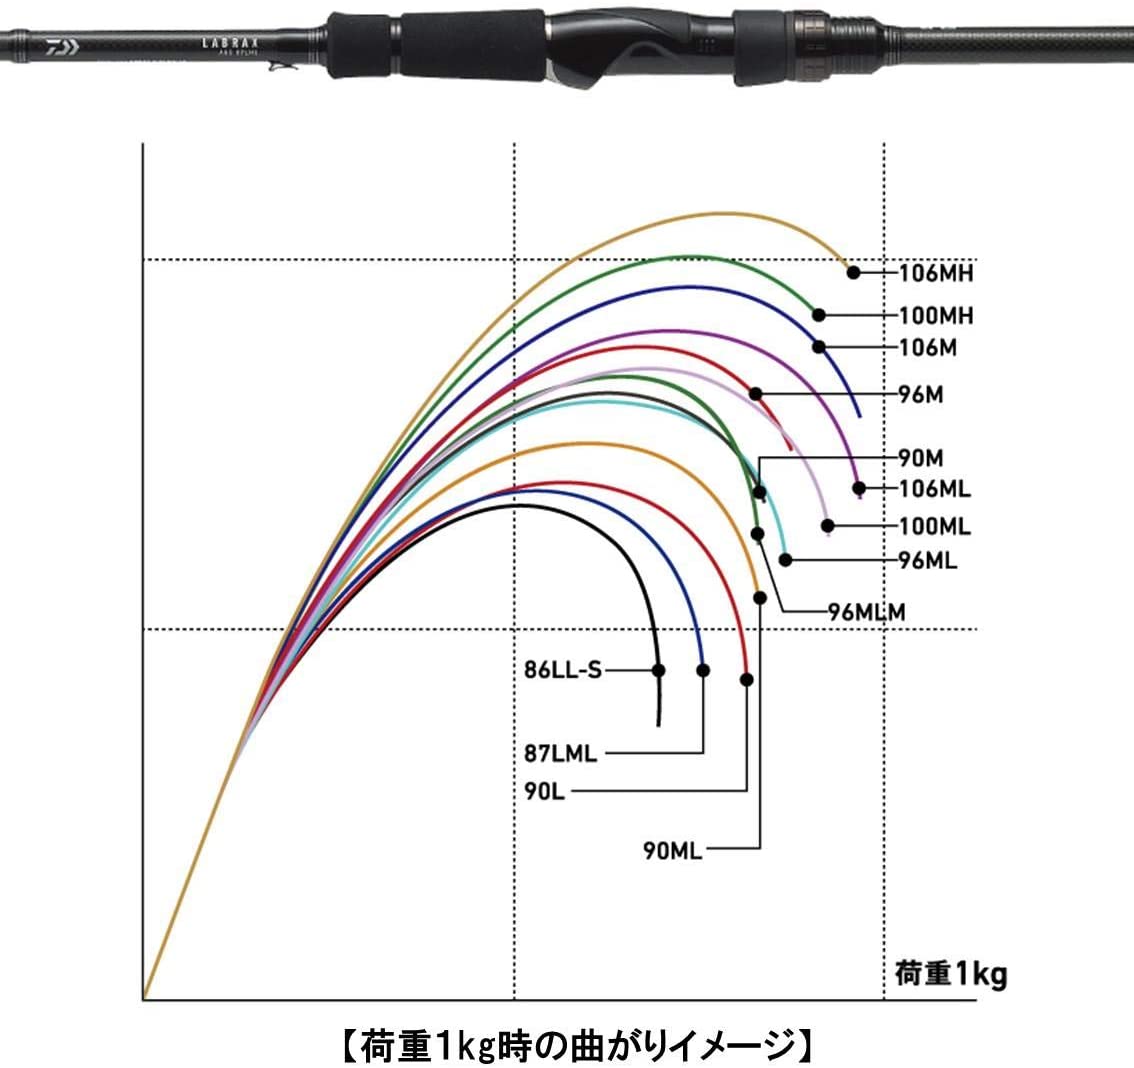 Daiwa Seabass Rod Labrax AGS 100MH Fishing Rod